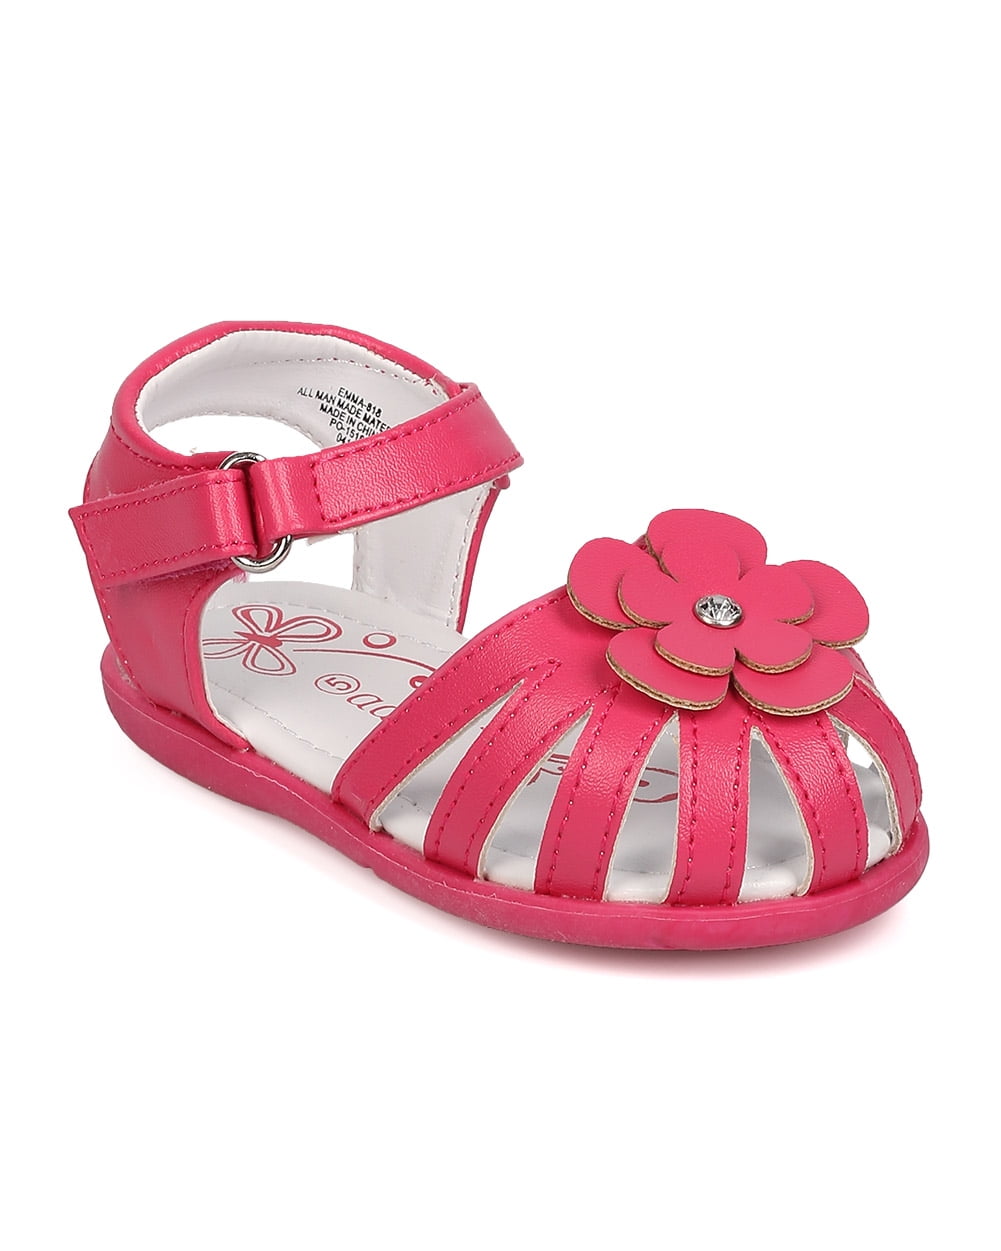 New Toddler Girls Aadi Emma-818 Leatherette Daisy Fisherman White & Pink $18.99 